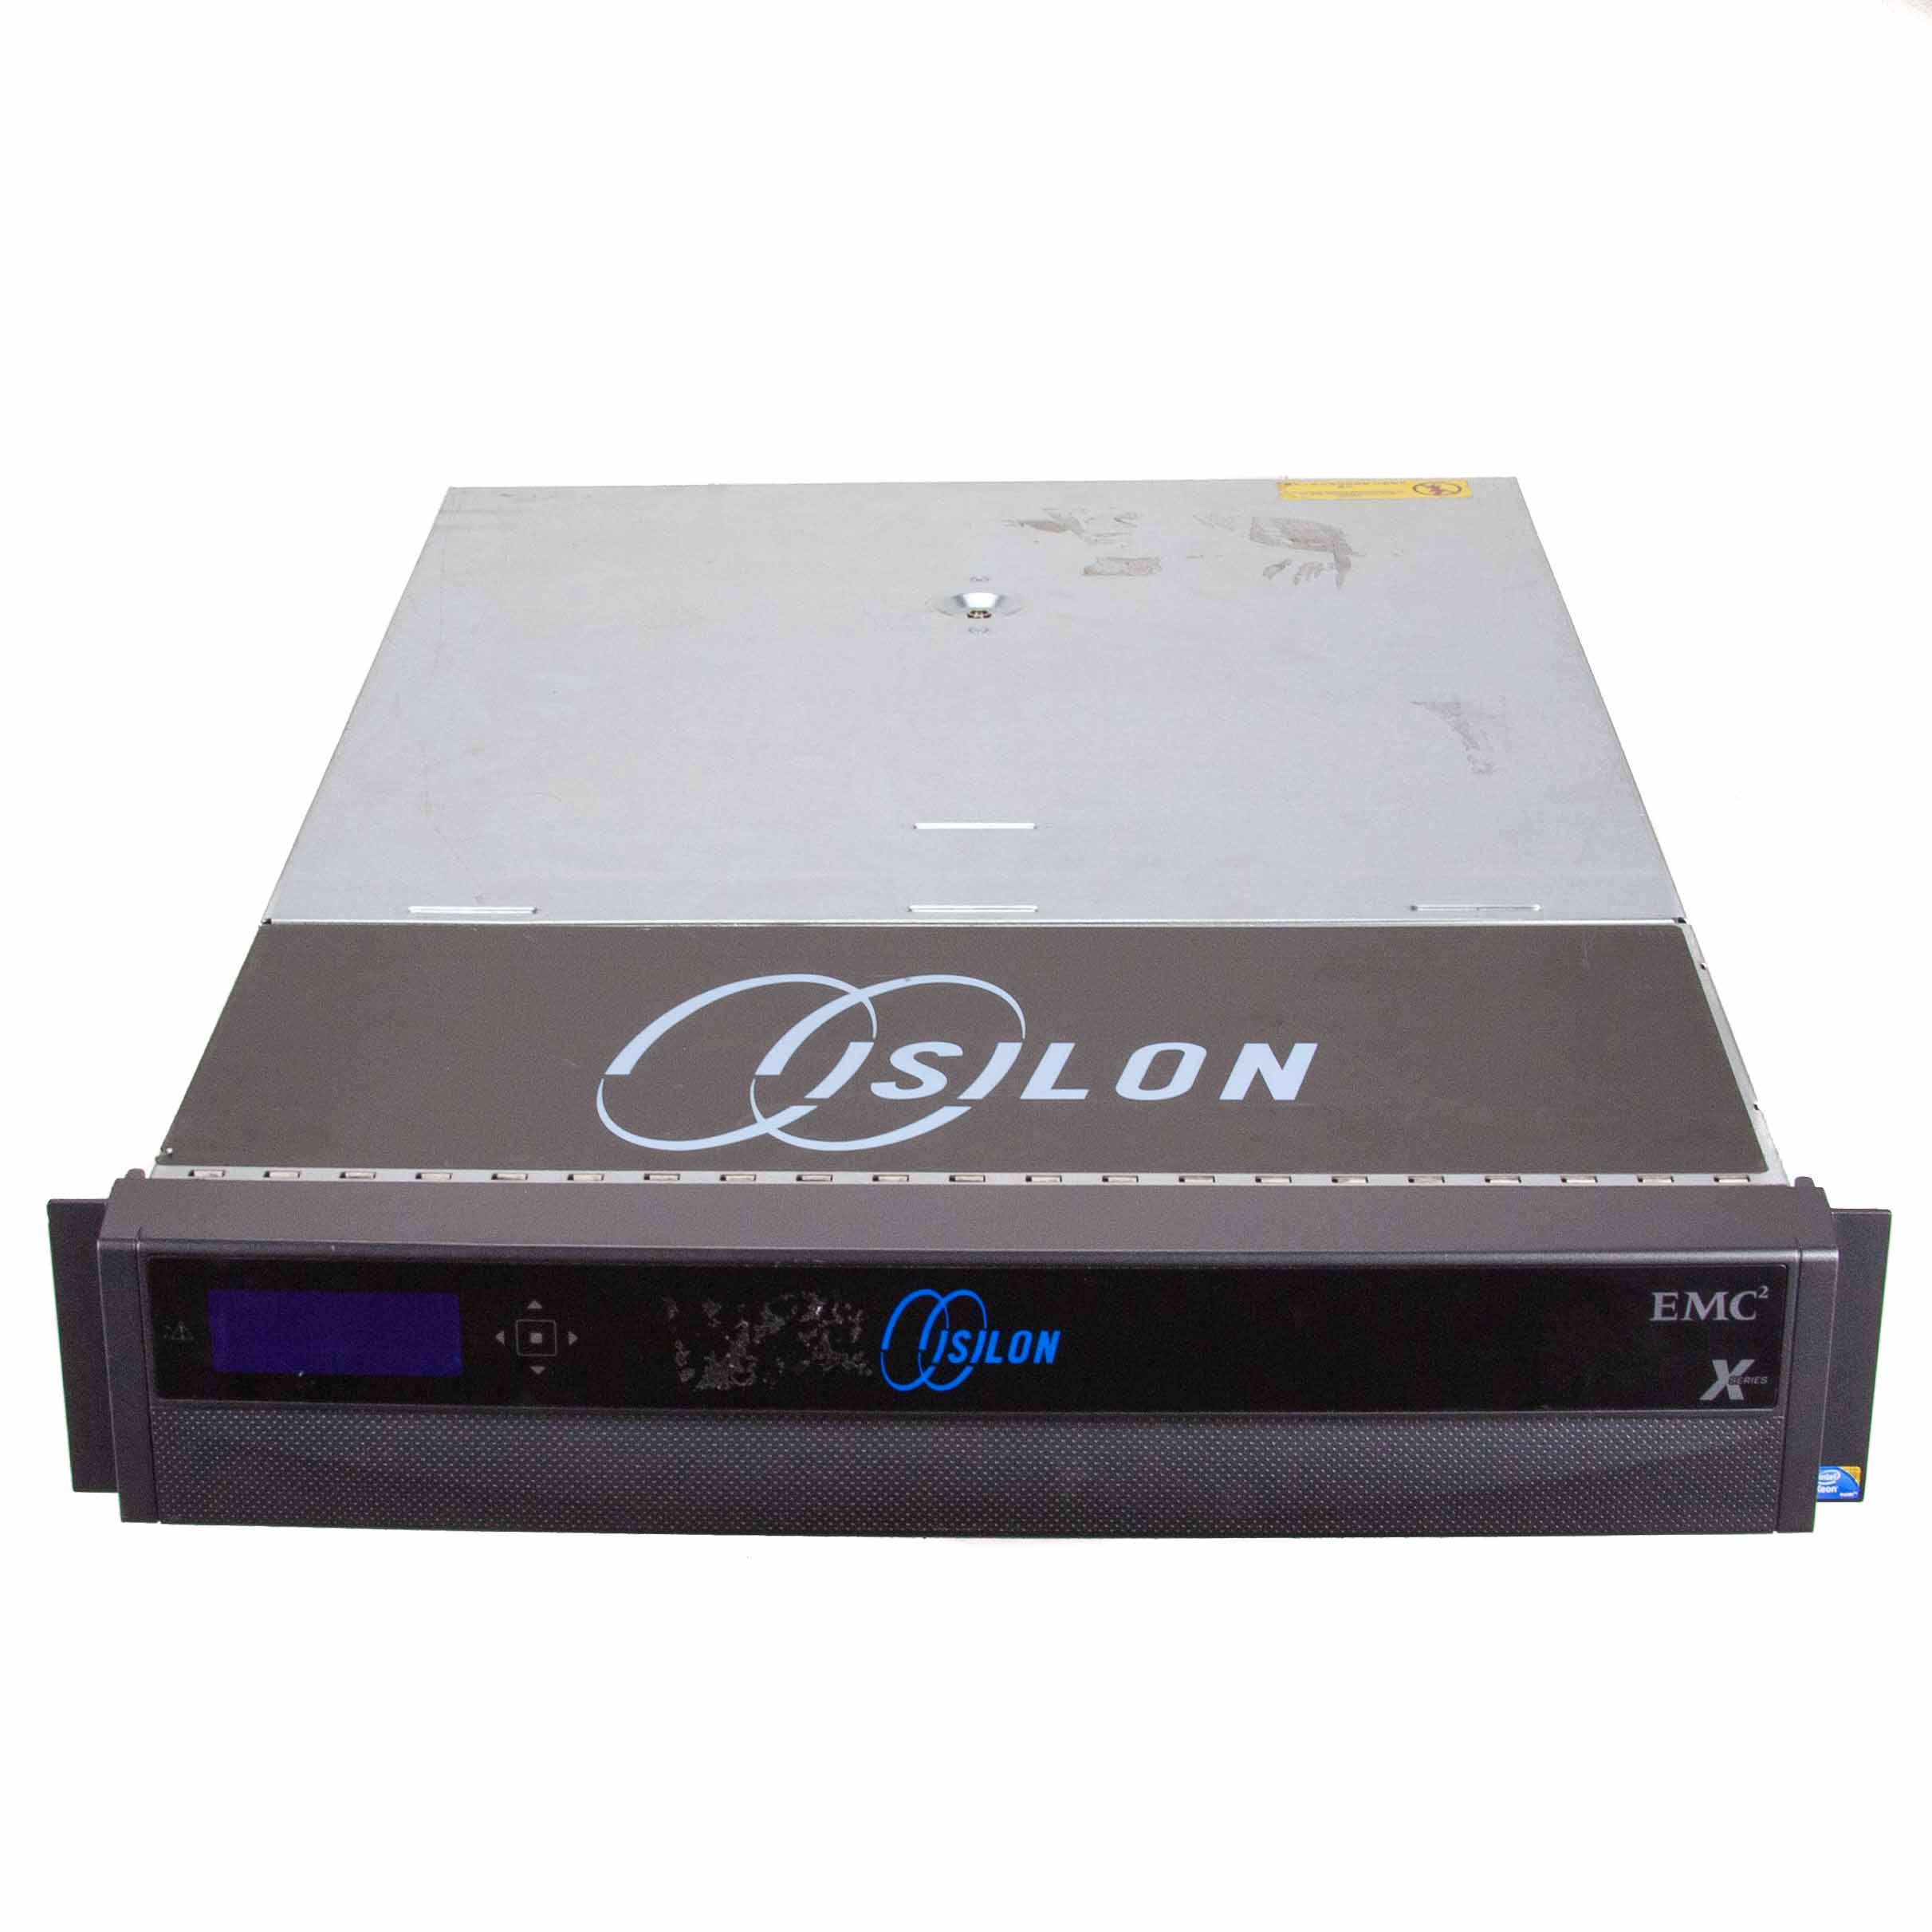 EMC Isilon X200 E5504 12GB DDR3 Dual 760W PSU 2U 12 Bay NAS Storage System  NODE